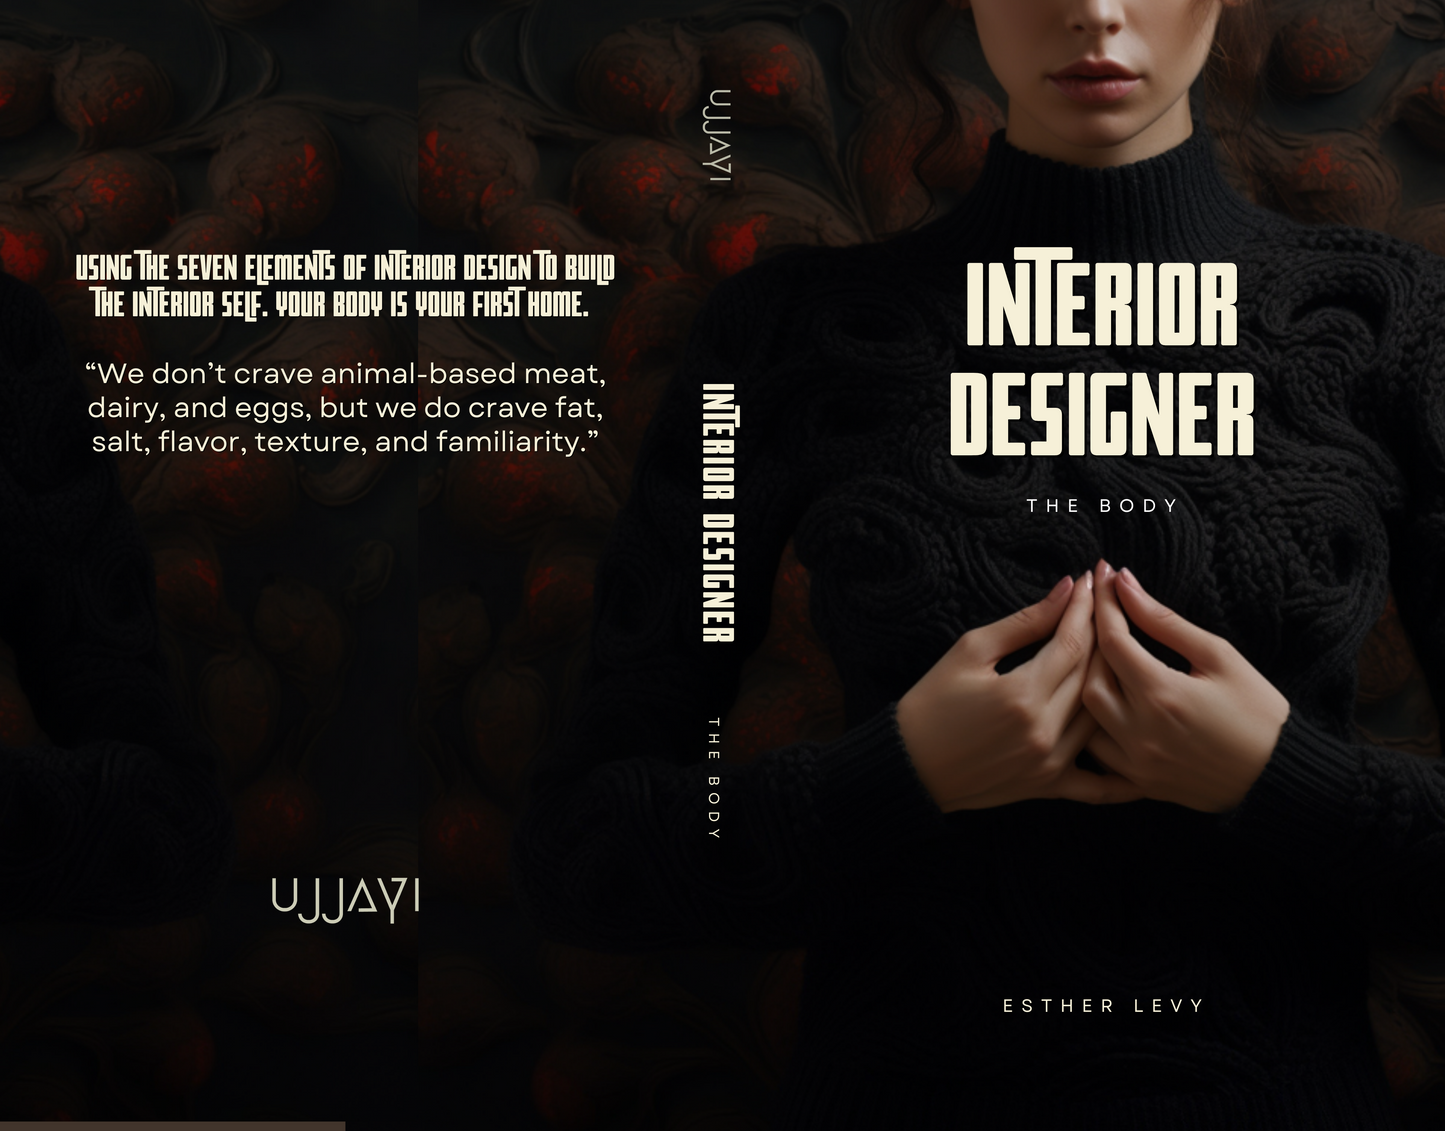 Interior Designer - The Body